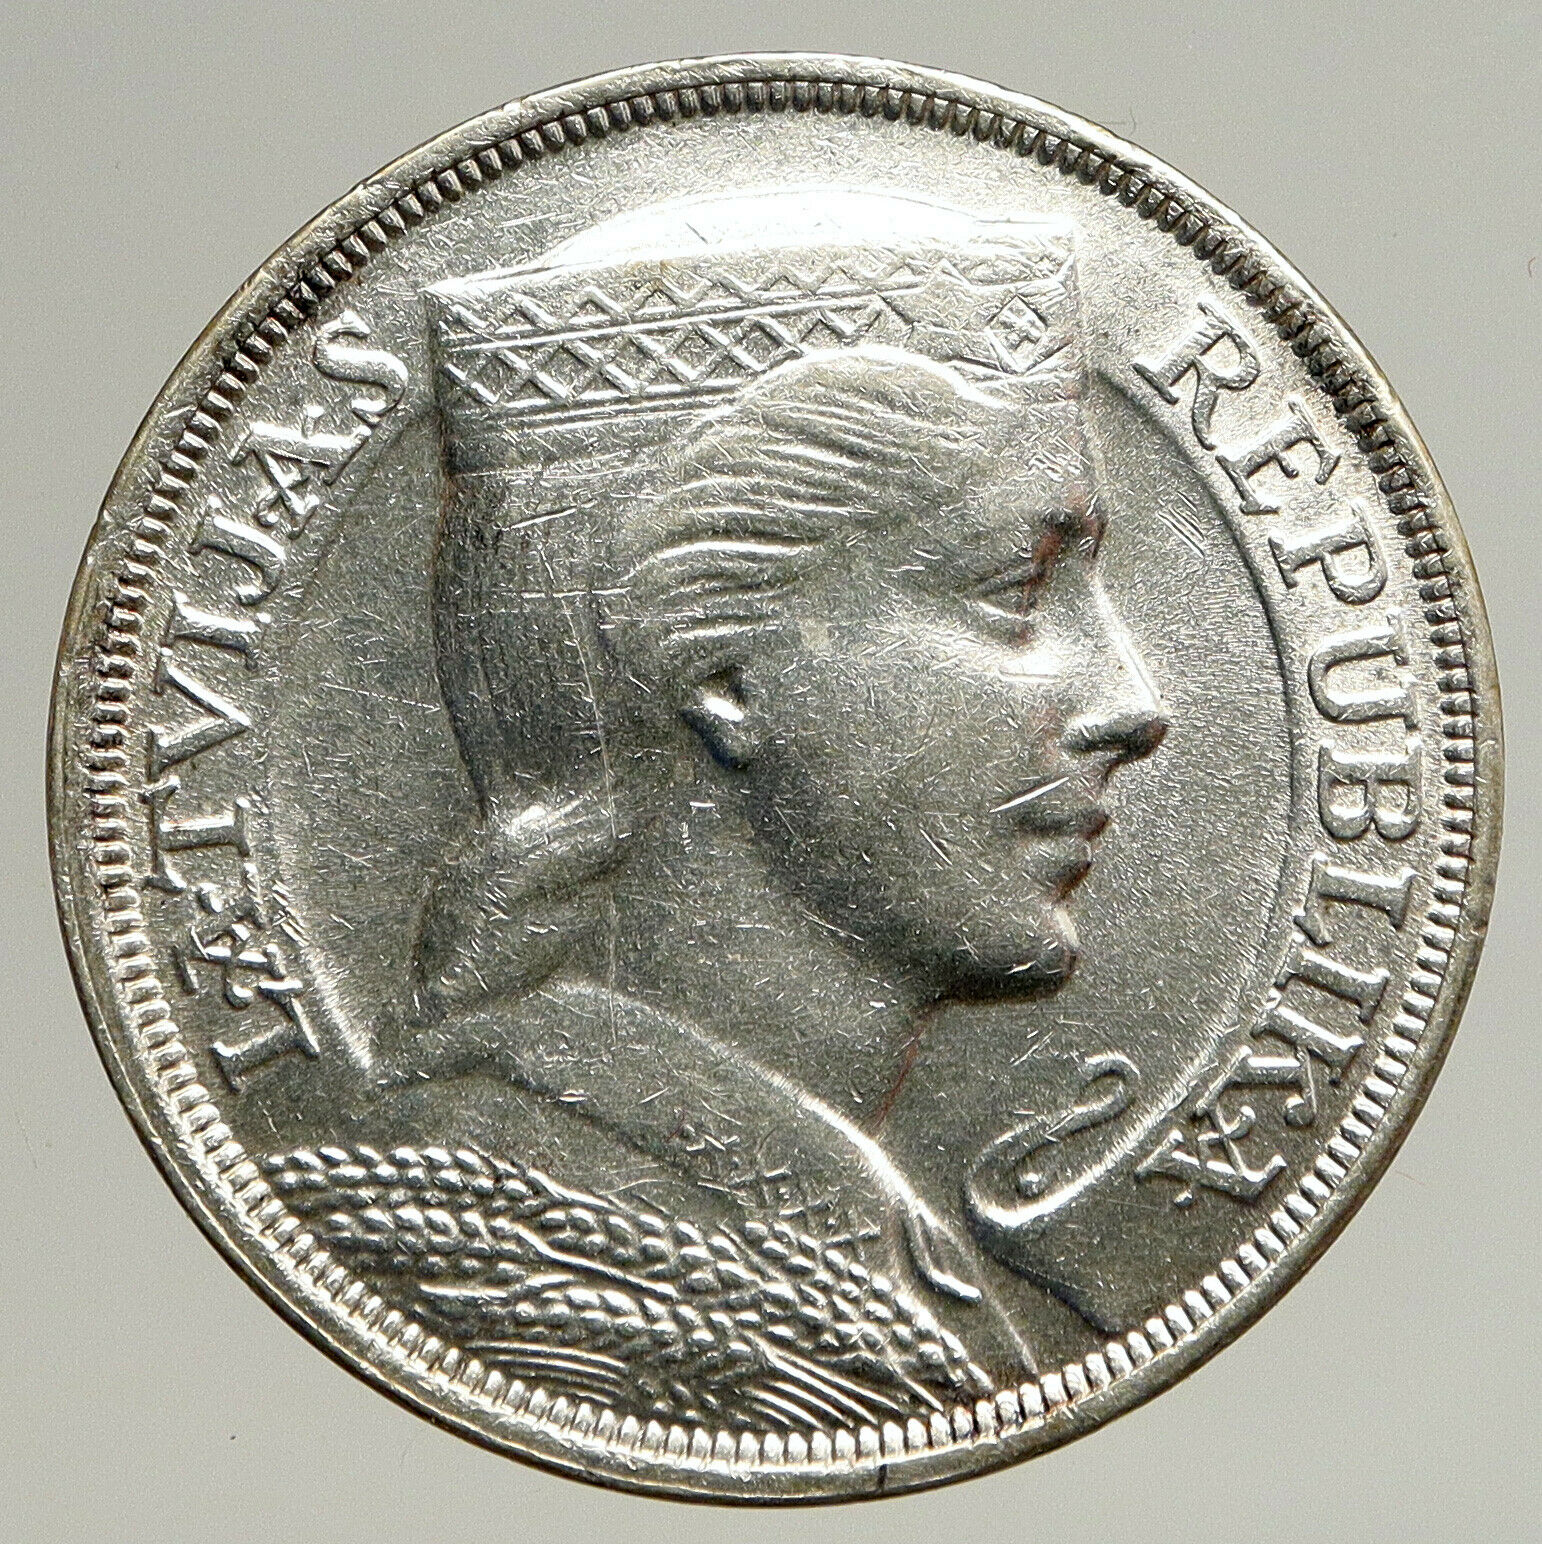 1932 LATVIA w Female Headwear 5 Lati LARGE Vintage Silver European Coin i93559